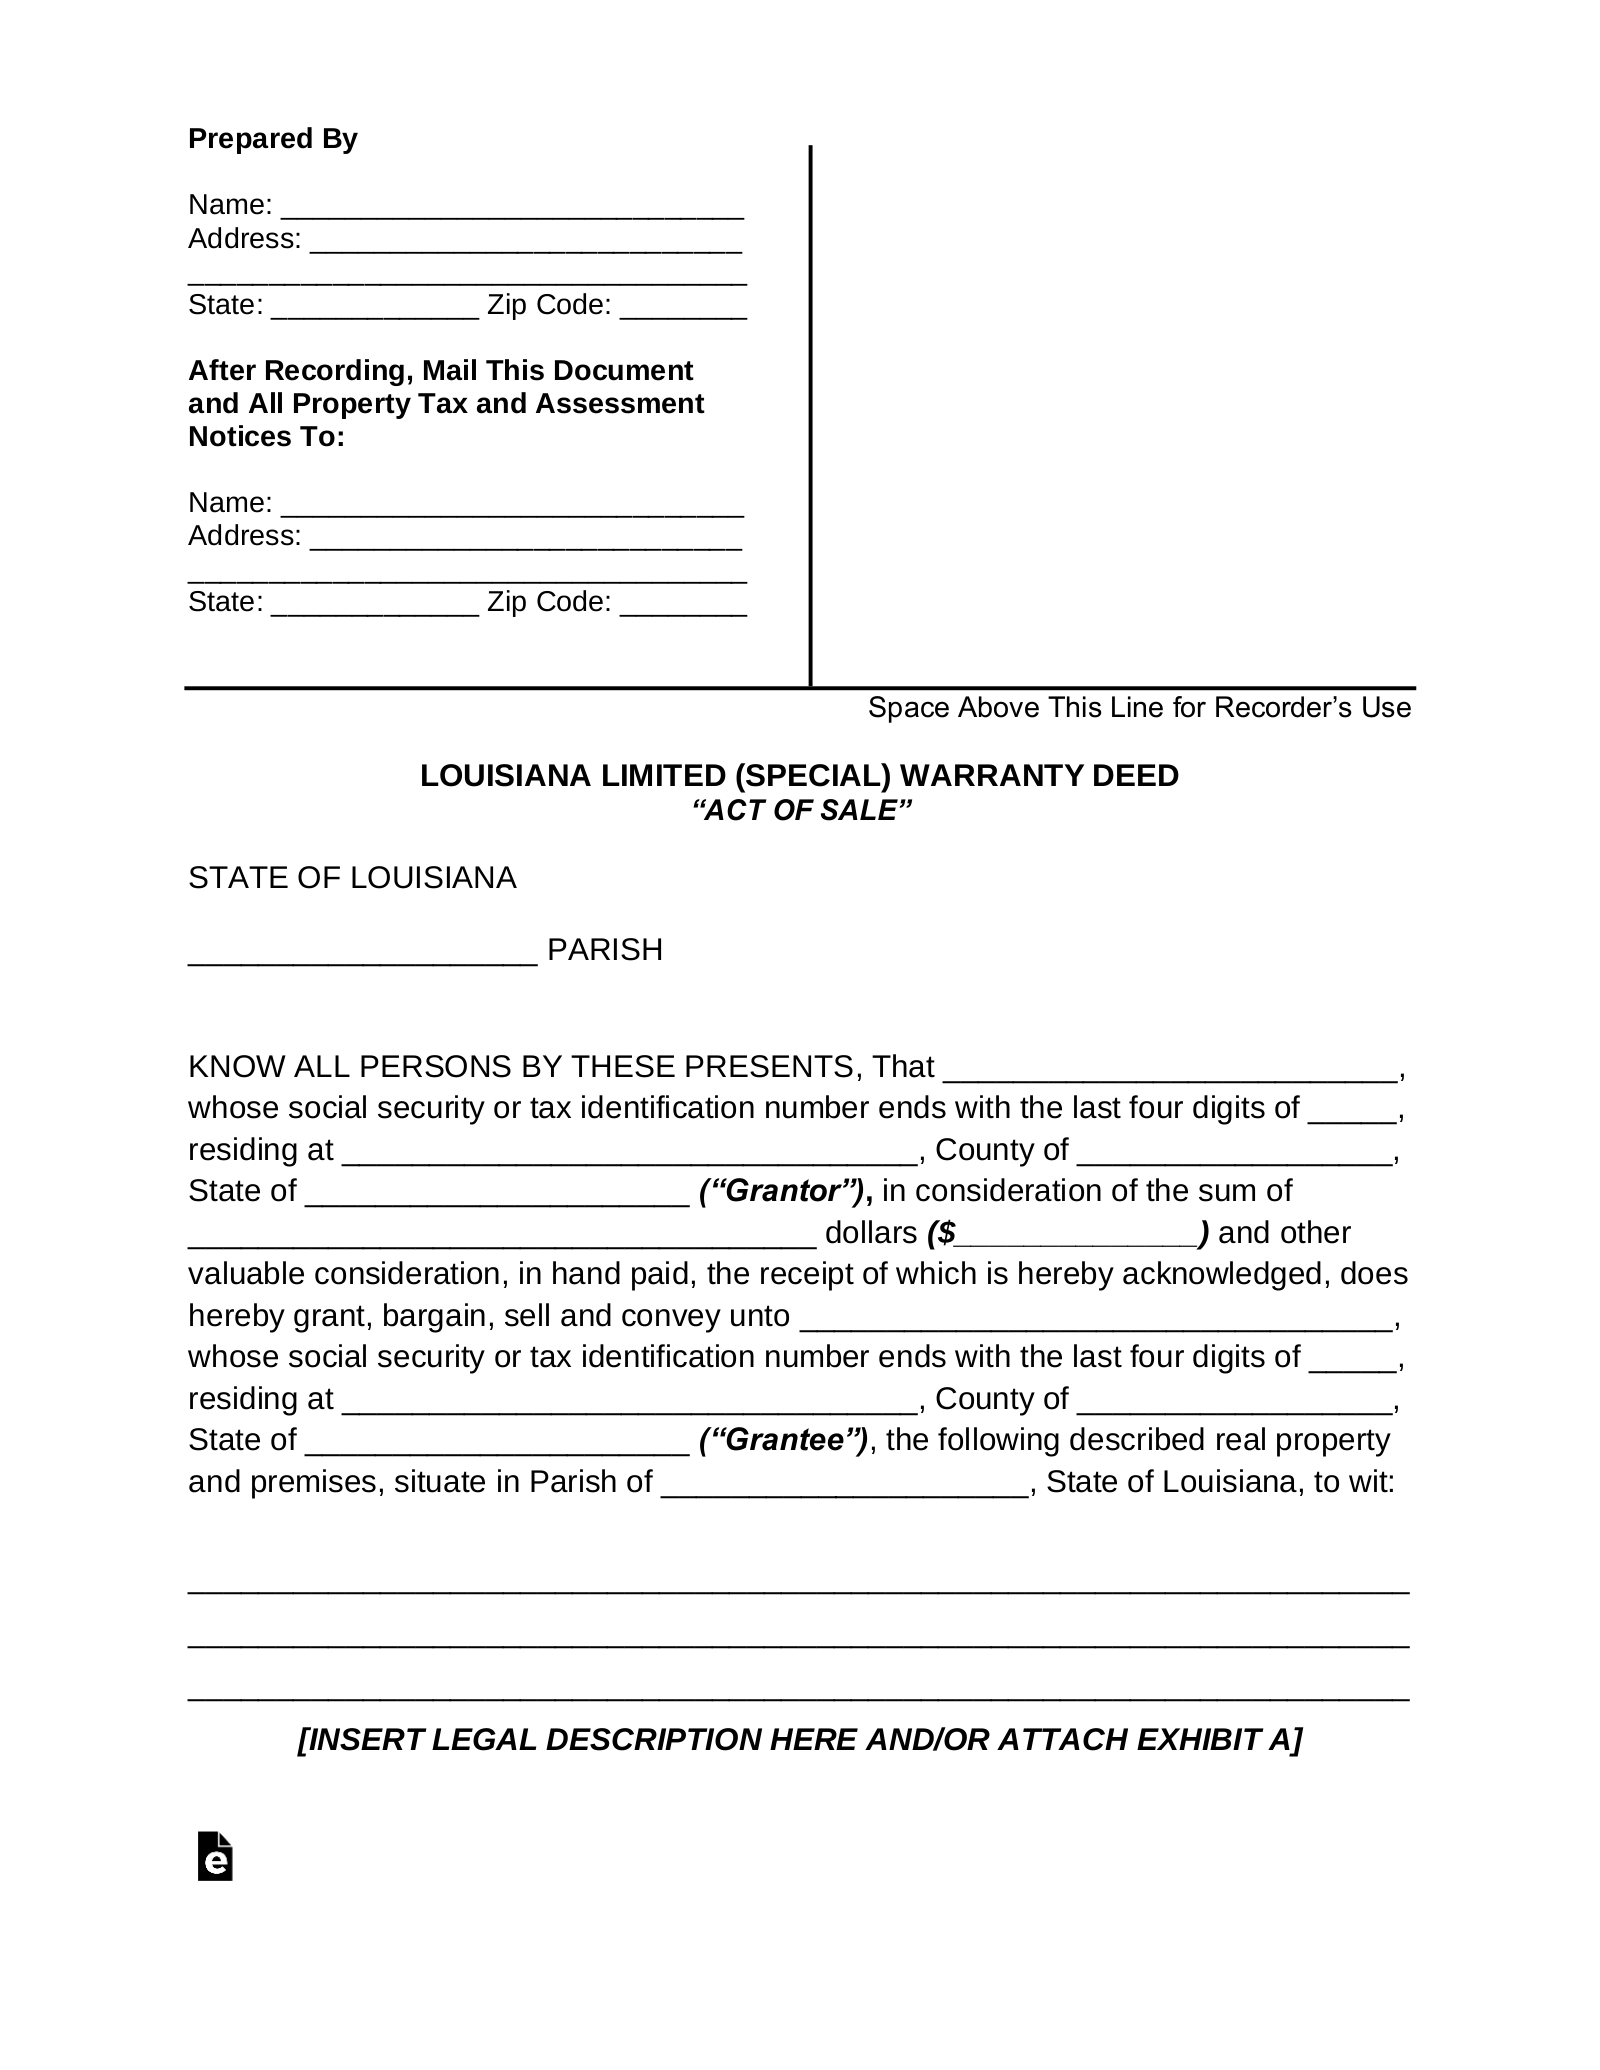 Louisiana Special Warranty Deed Form